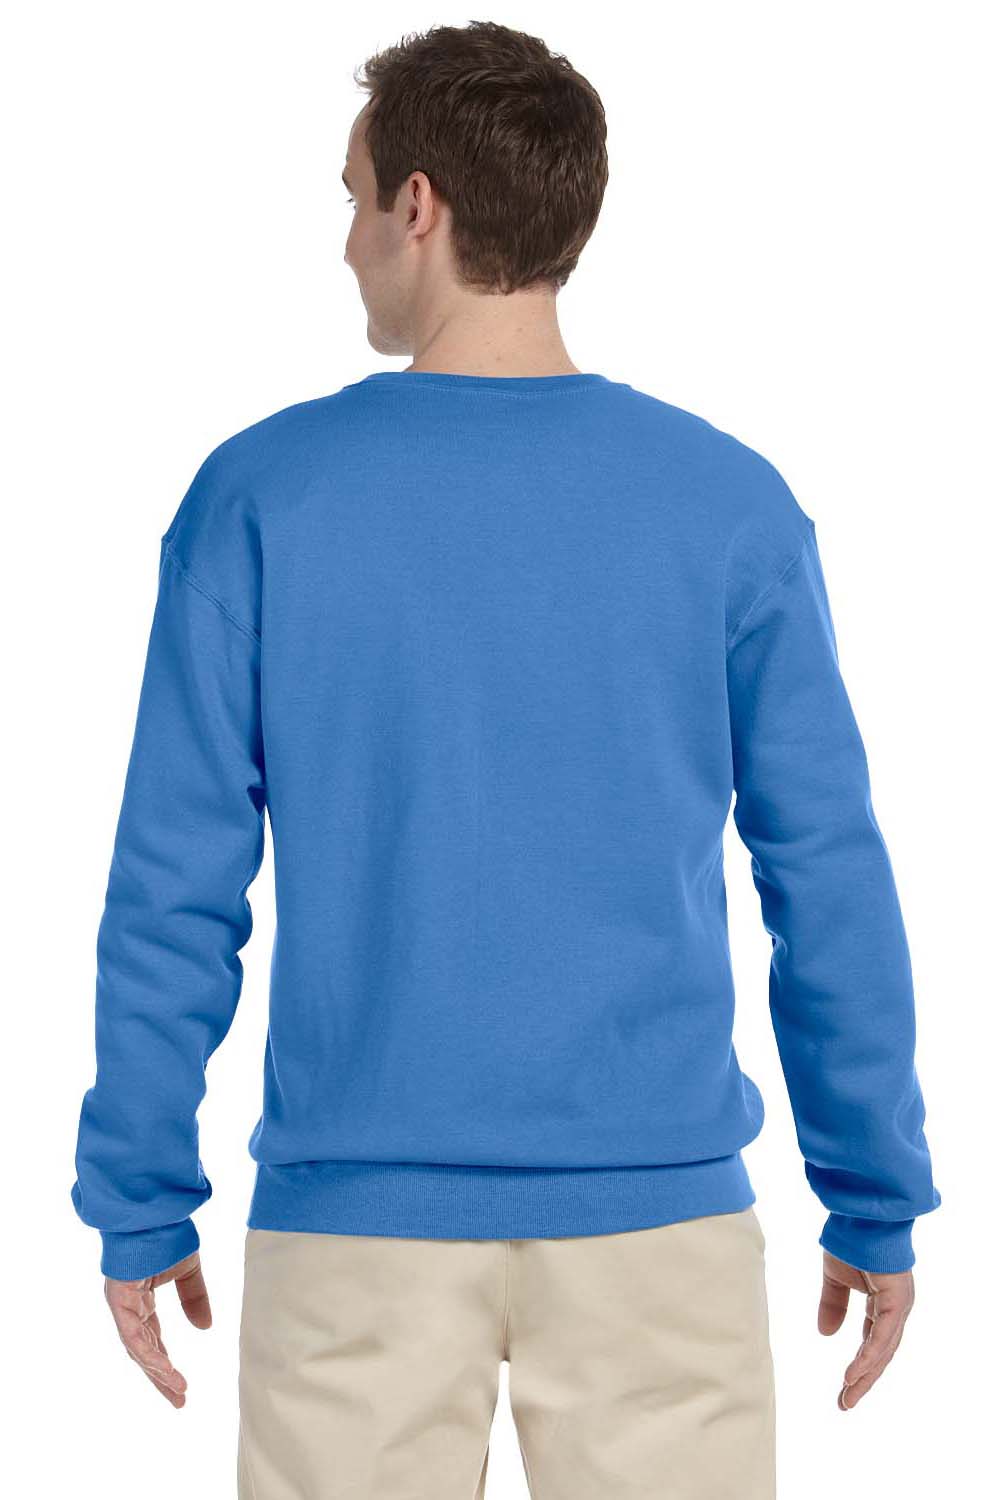 Jerzees 562 Mens NuBlend Fleece Crewneck Sweatshirt Columbia Blue Back